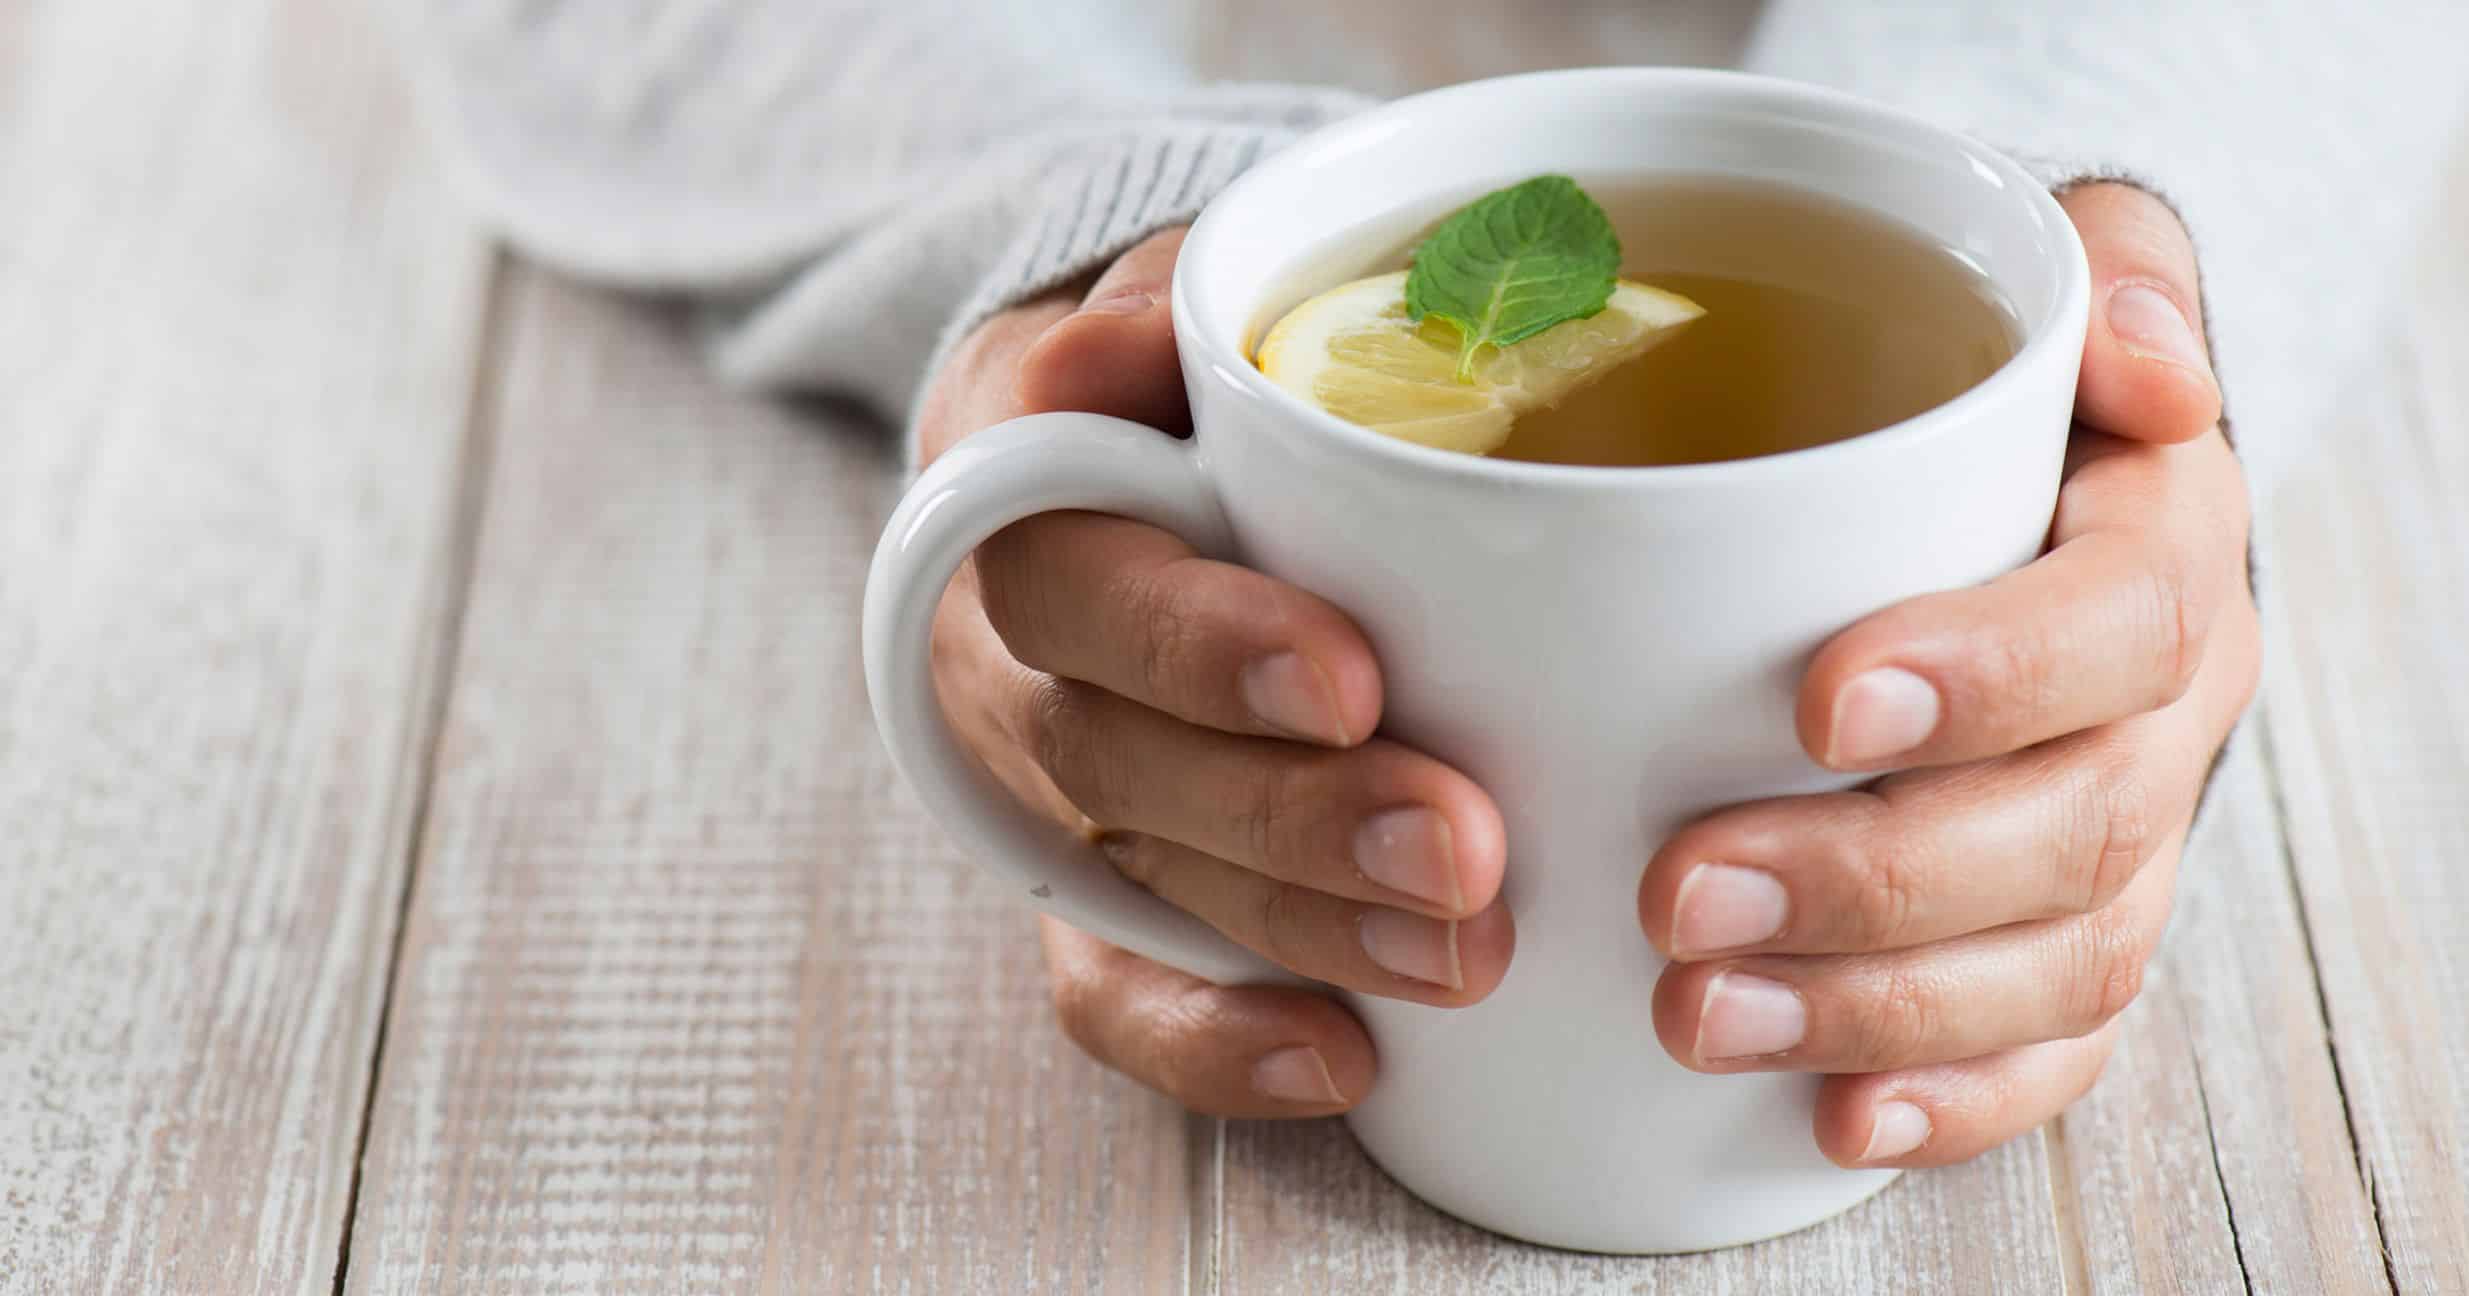 Cup of green tea being held